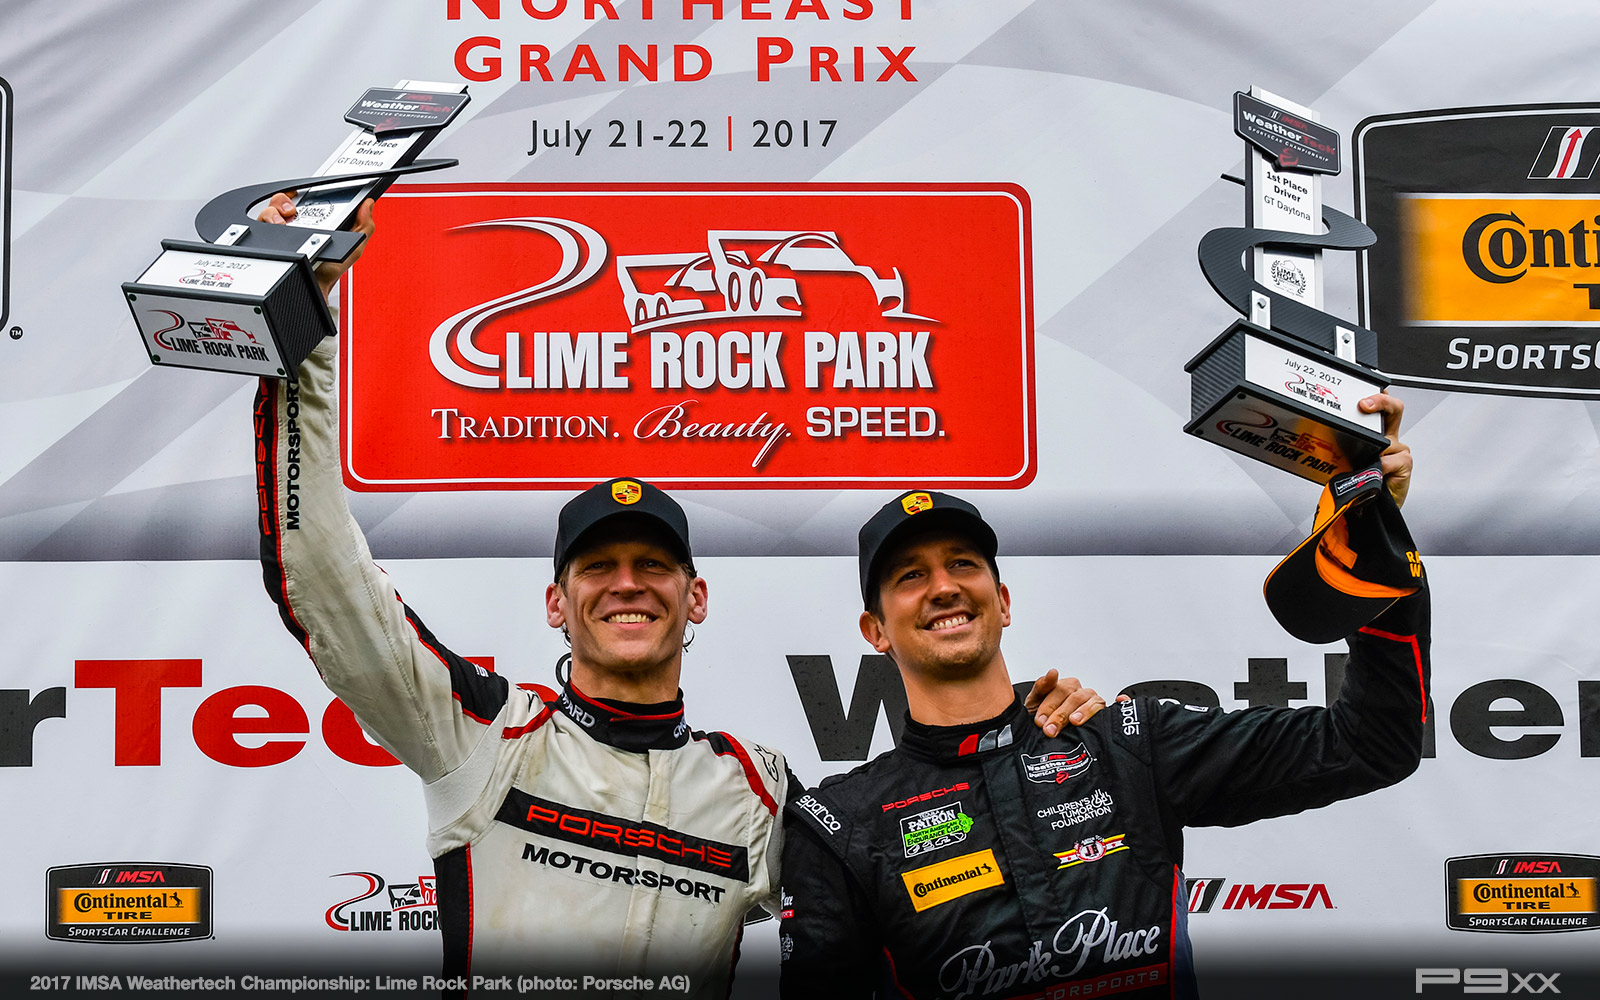 2017 Northeast Grand Prix of Lime Rock Park